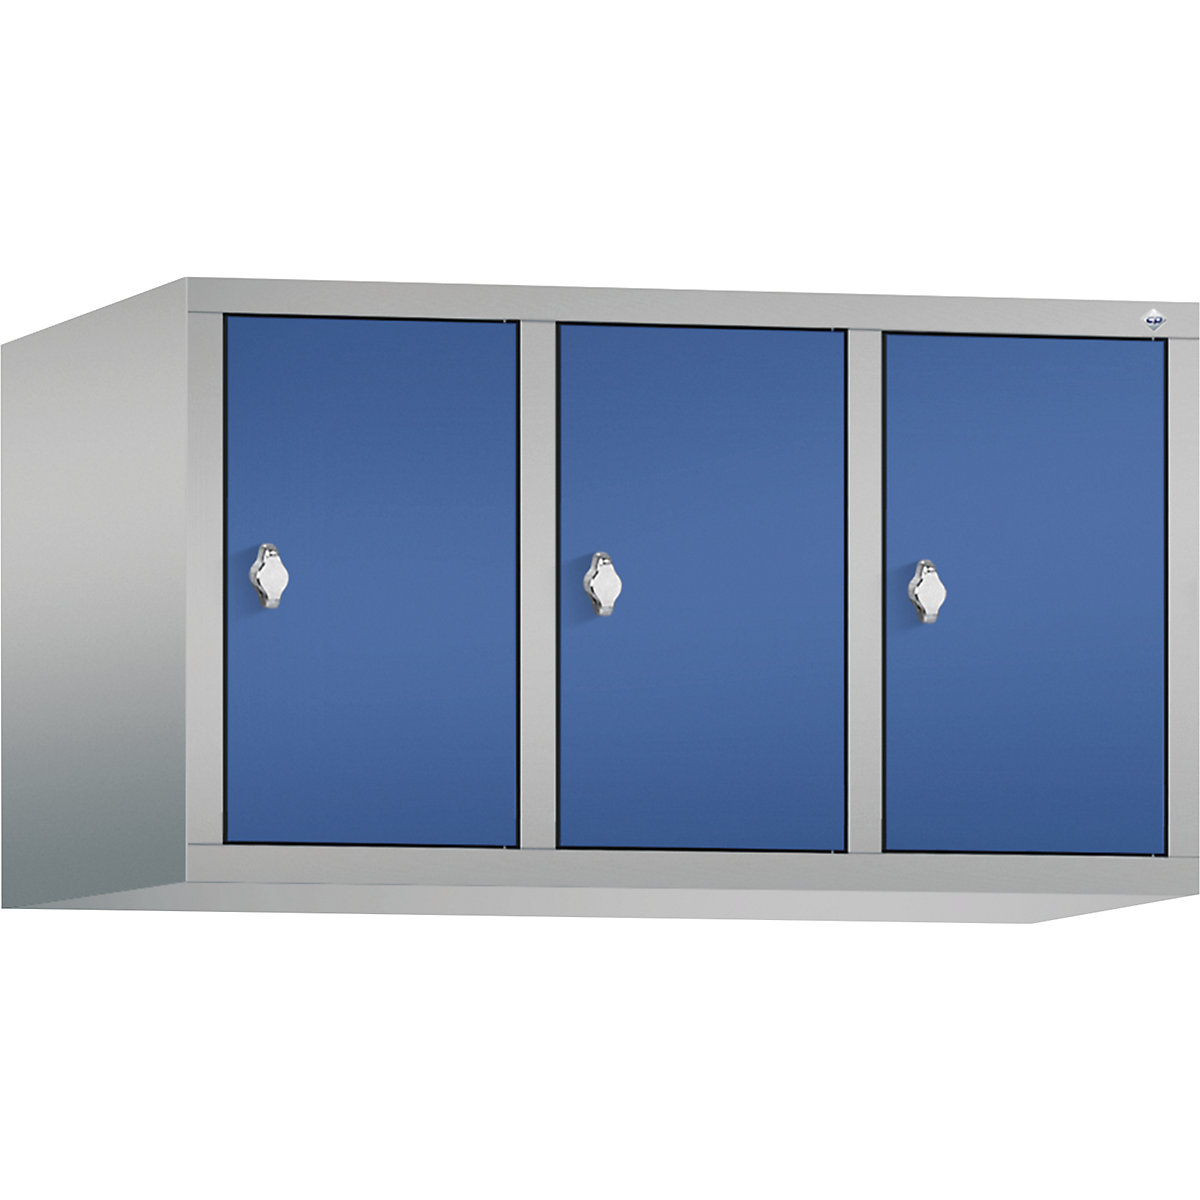 C+P – Altillo CLASSIC, 3 compartimentos, anchura de compartimento 300 mm, aluminio blanco / azul genciana